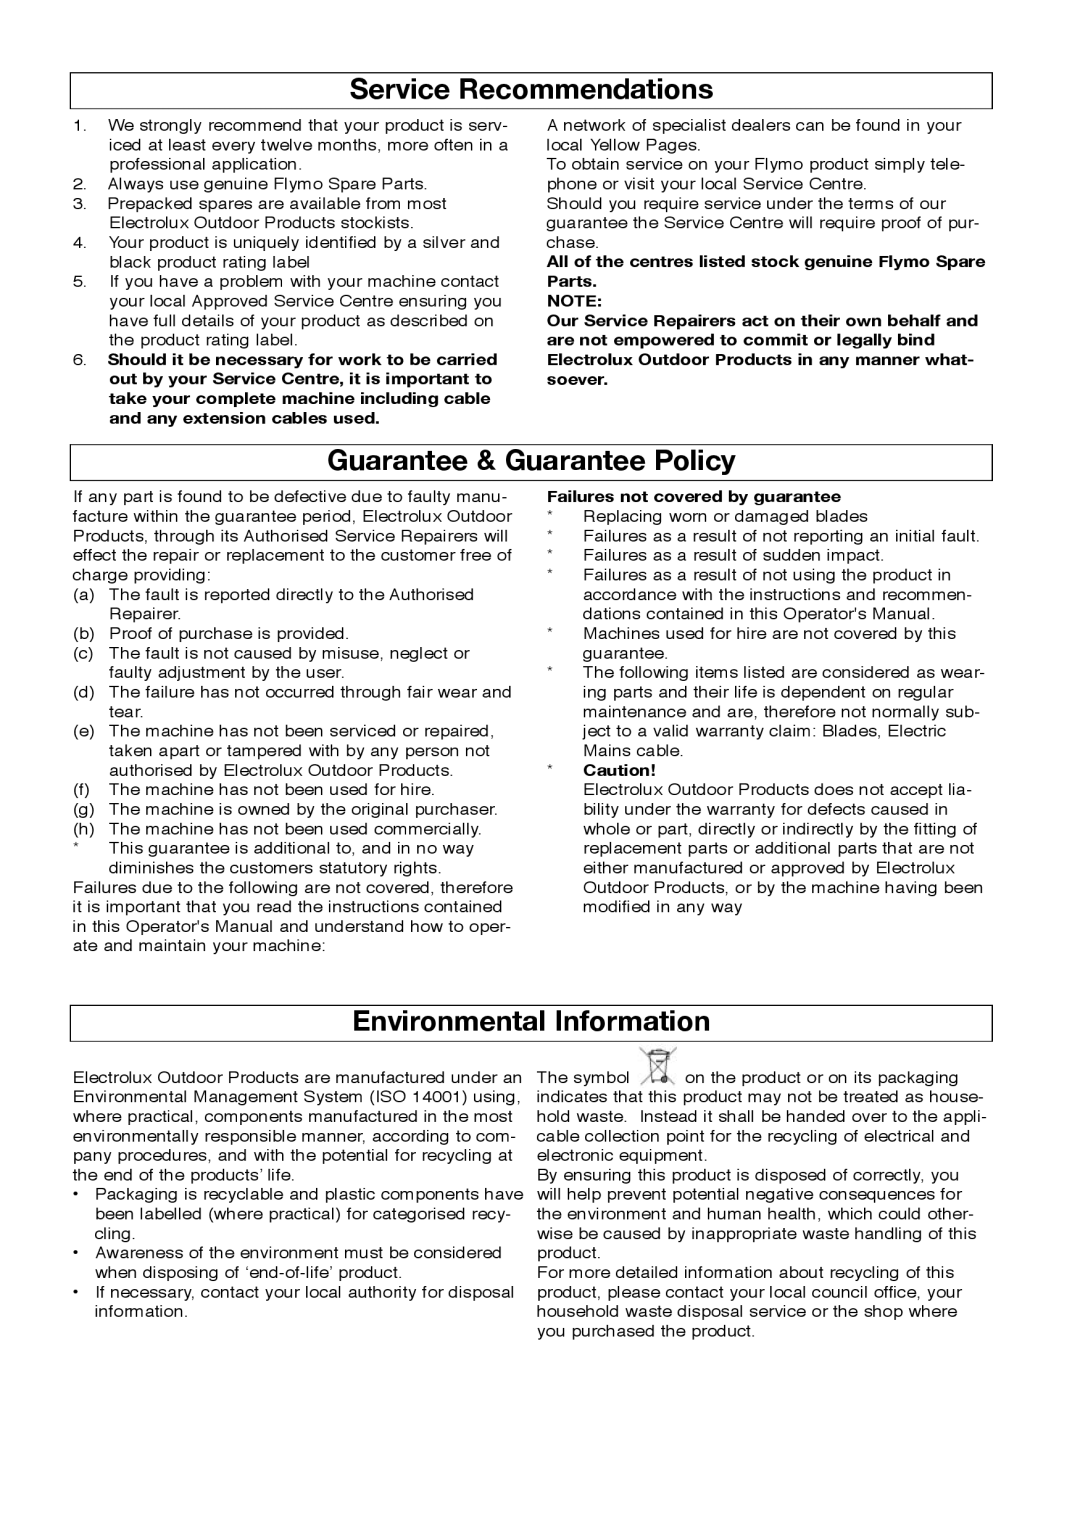 Flymo 350/400 manual Service Recommendations, Guarantee & Guarantee Policy, Environmental Information 